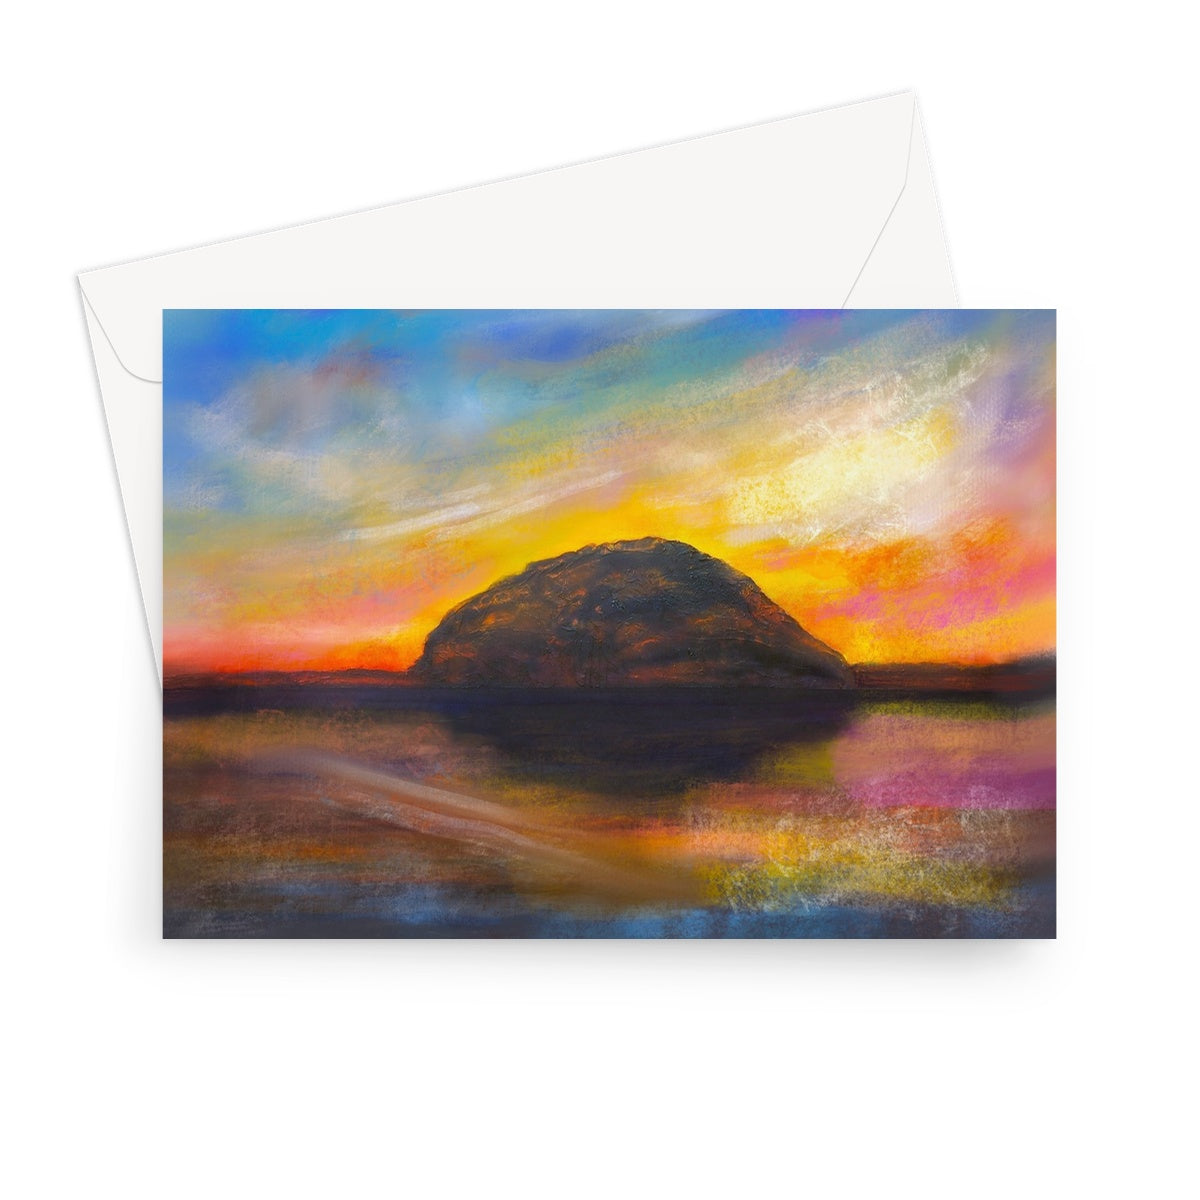 Ailsa Craig Dusk Arran Art Gifts Greeting Card-Greetings Cards-Arran Art Gallery-7"x5"-10 Cards-Paintings, Prints, Homeware, Art Gifts From Scotland By Scottish Artist Kevin Hunter